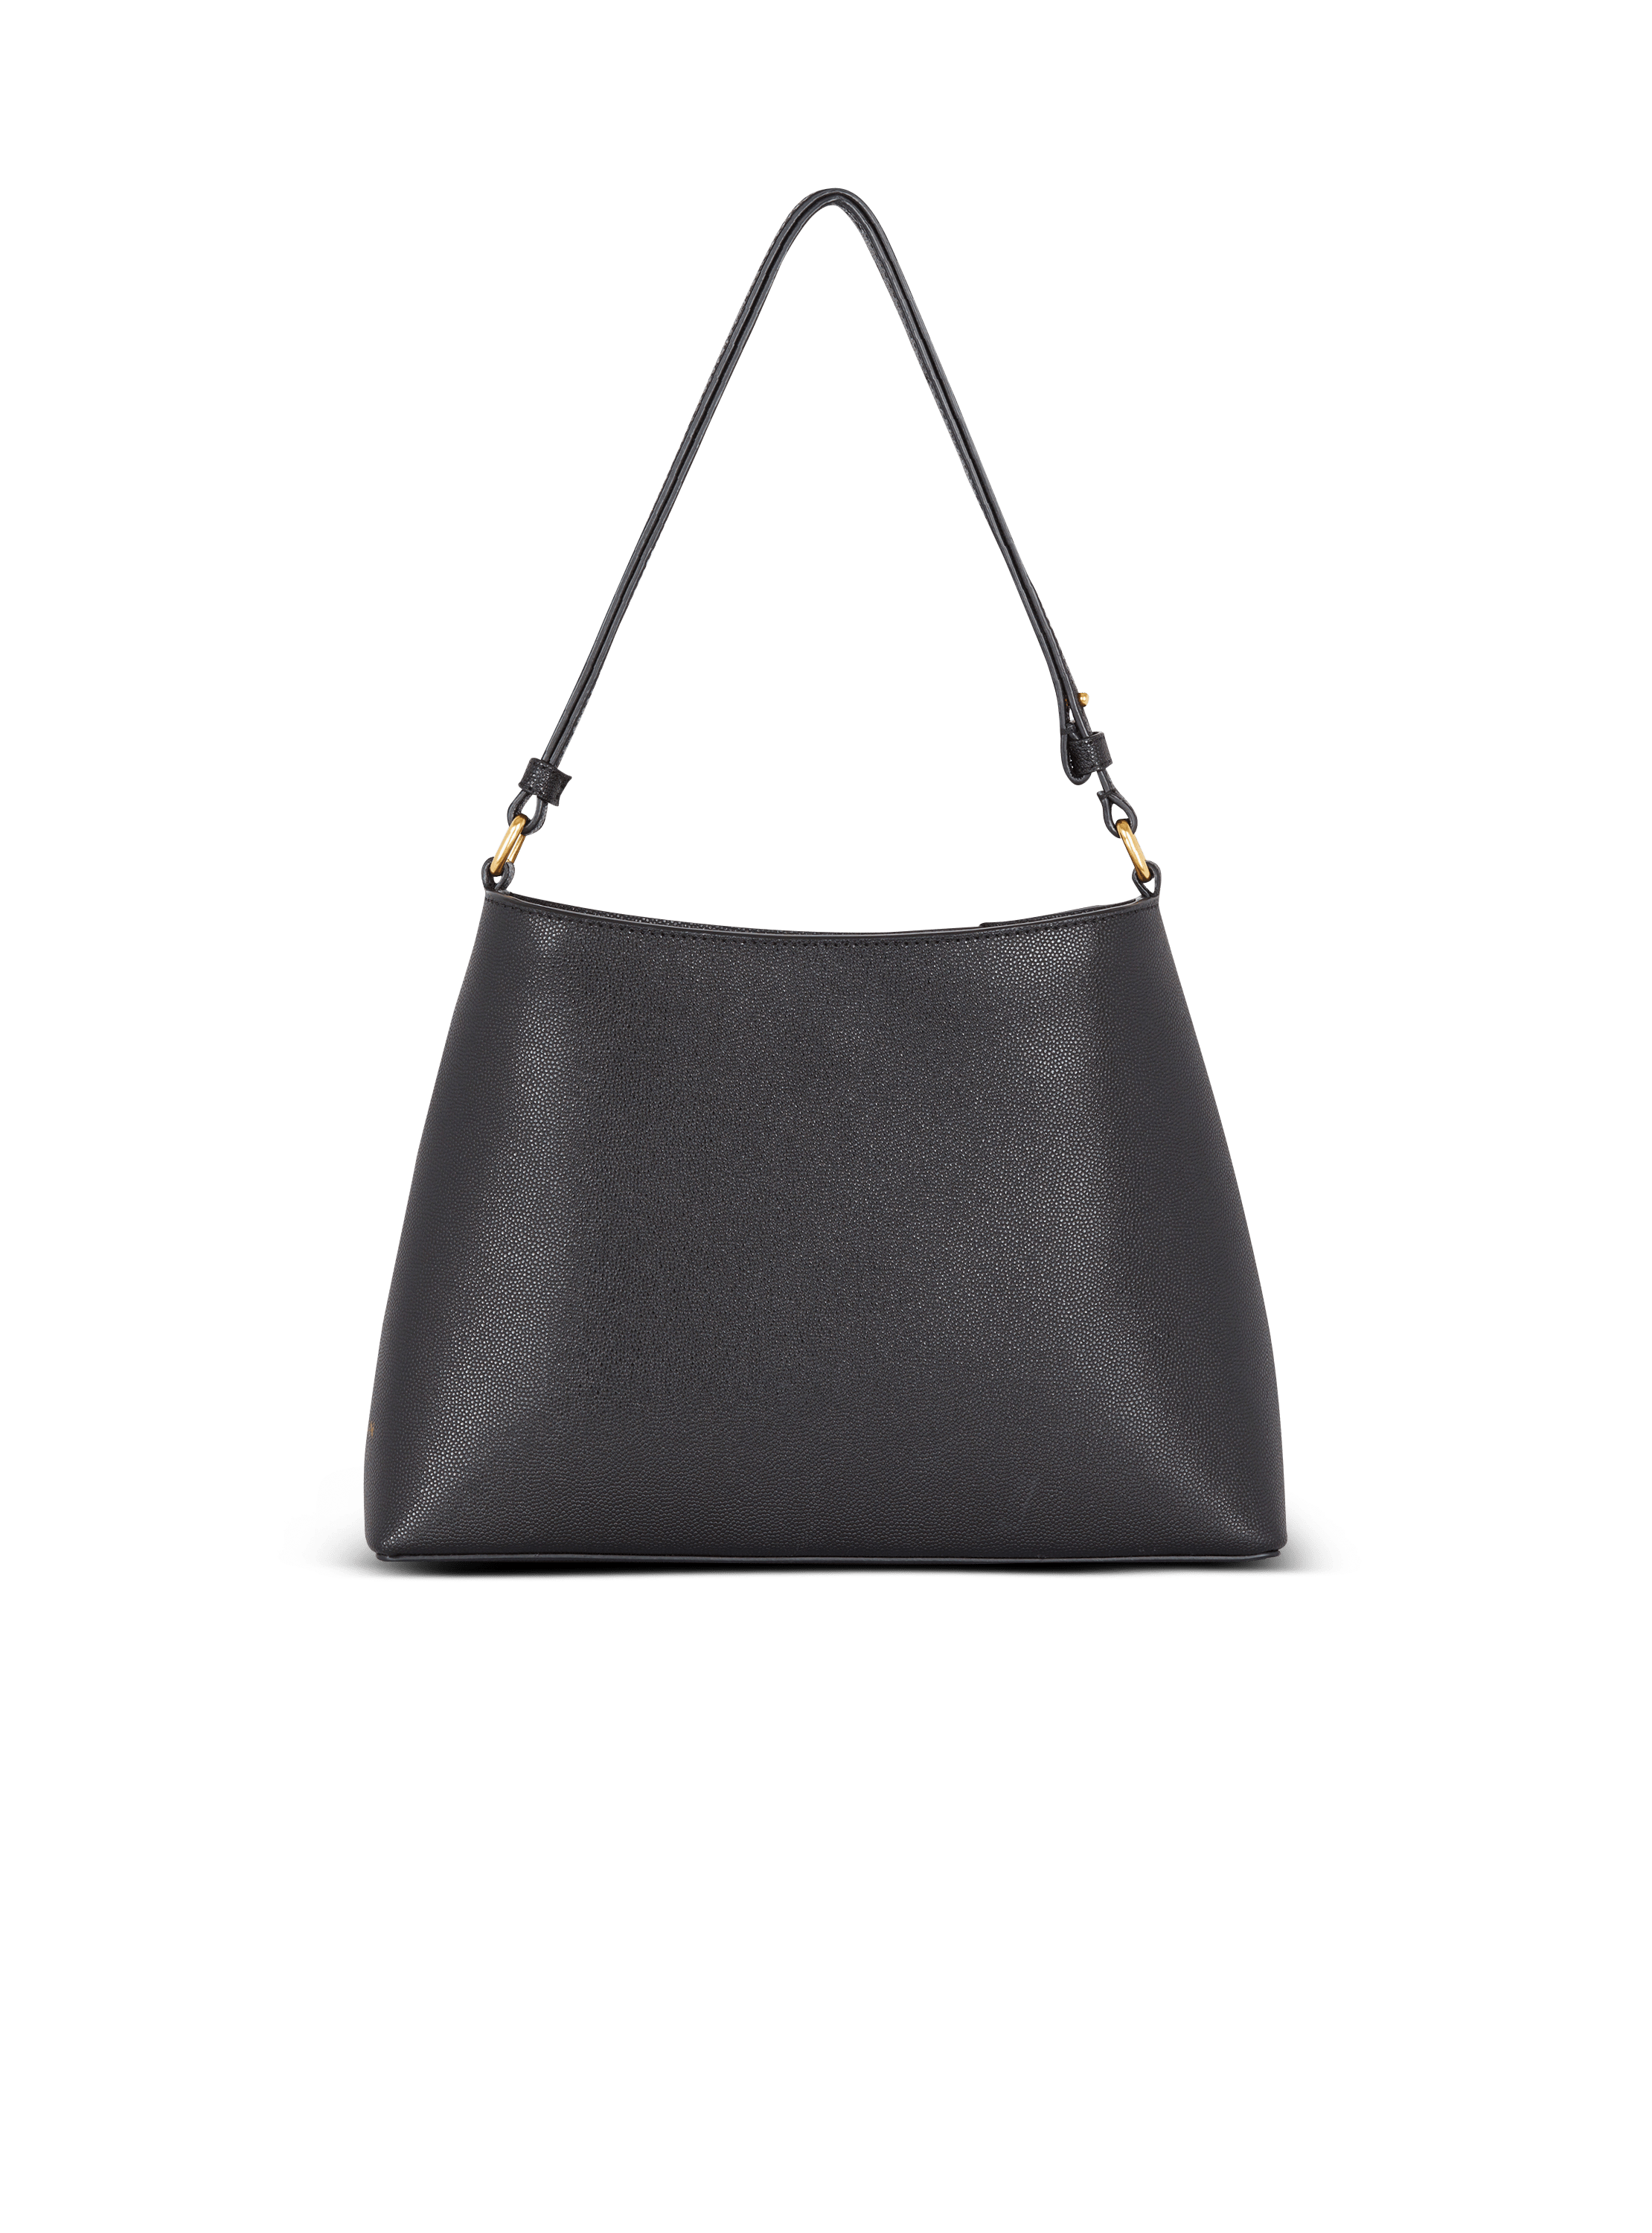 Grained Leather Emblem Handbag